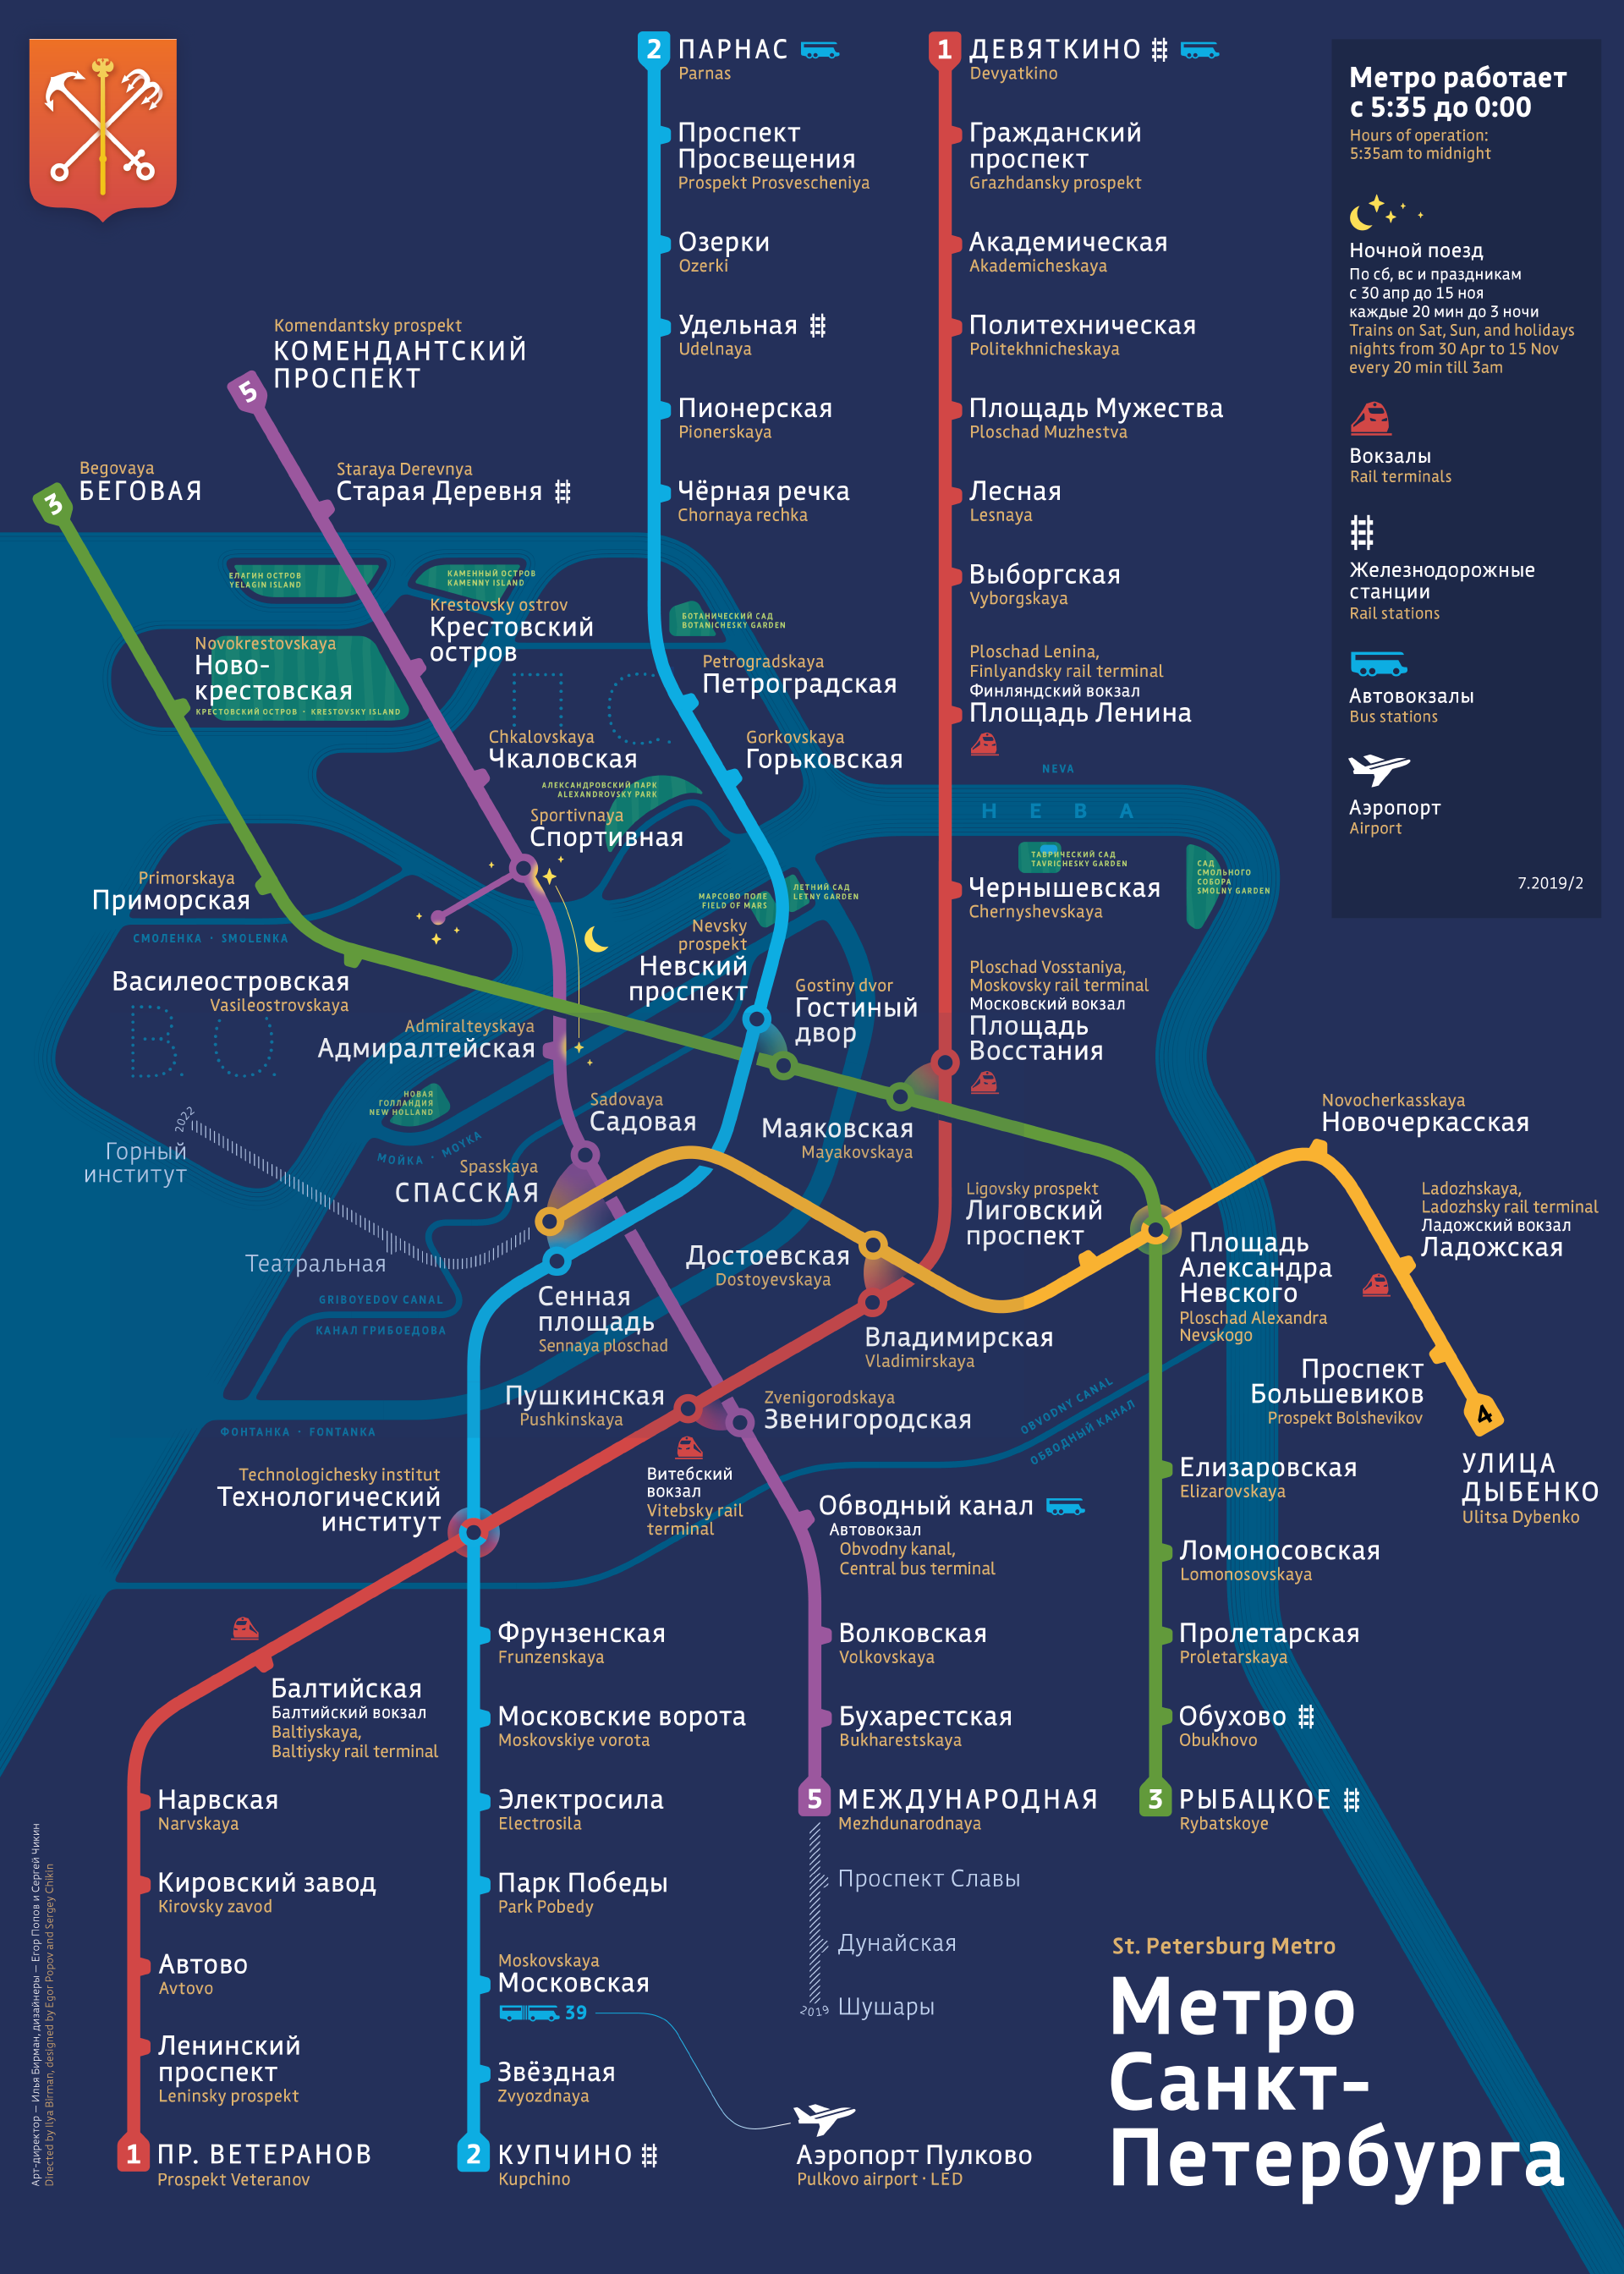 St. Petersburg Metro map